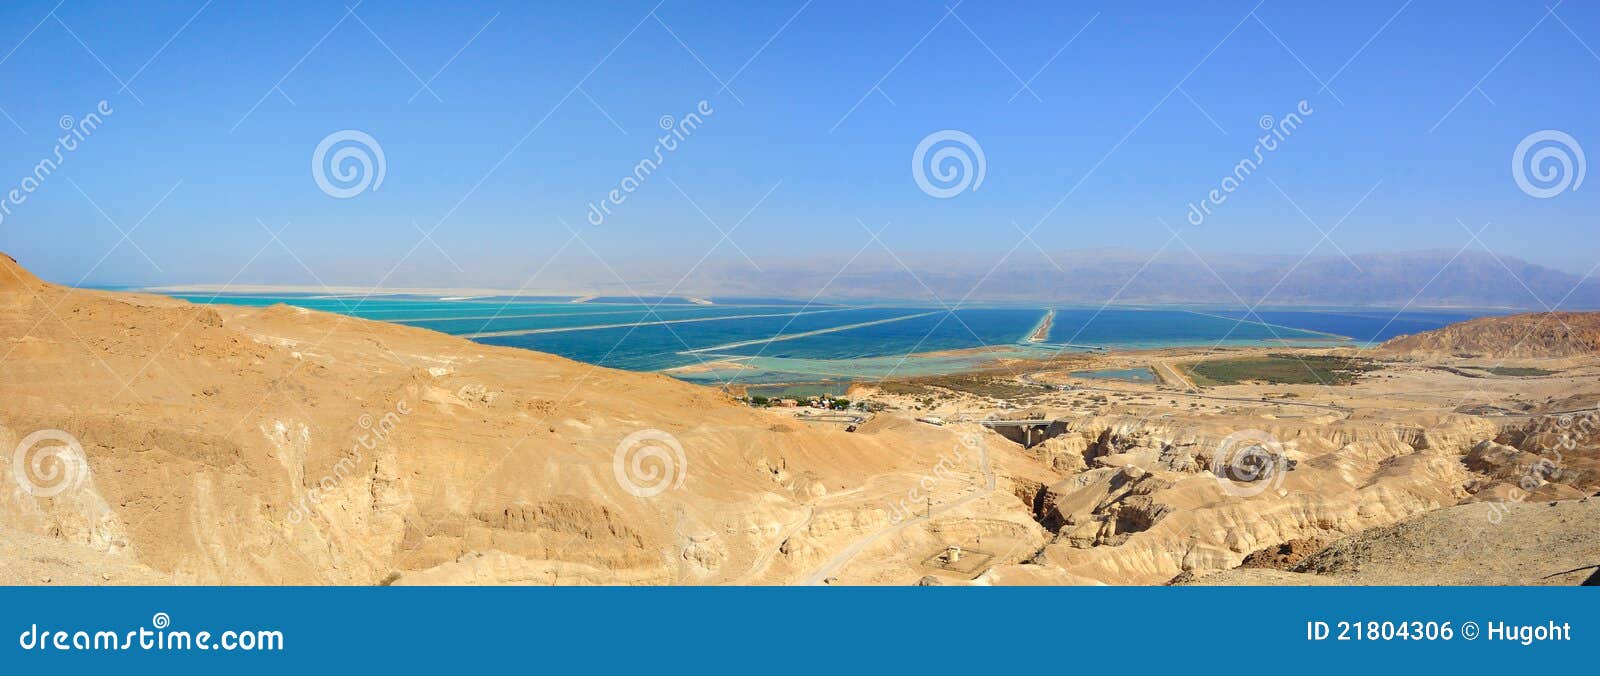 the dead sea, israel